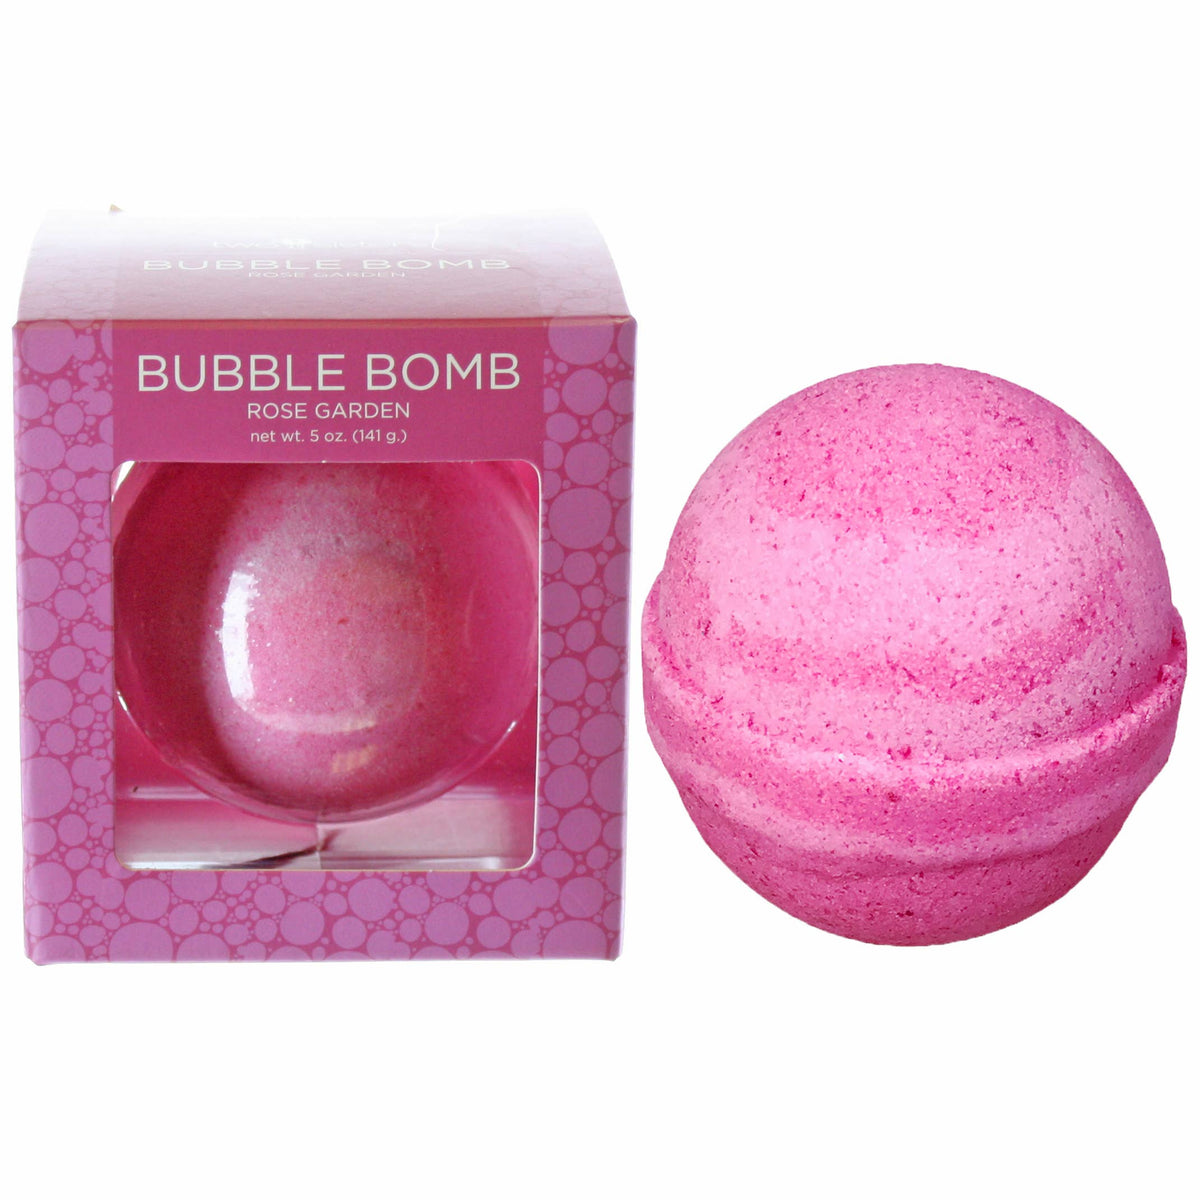 Rose Garden Bubble Bath Bomb